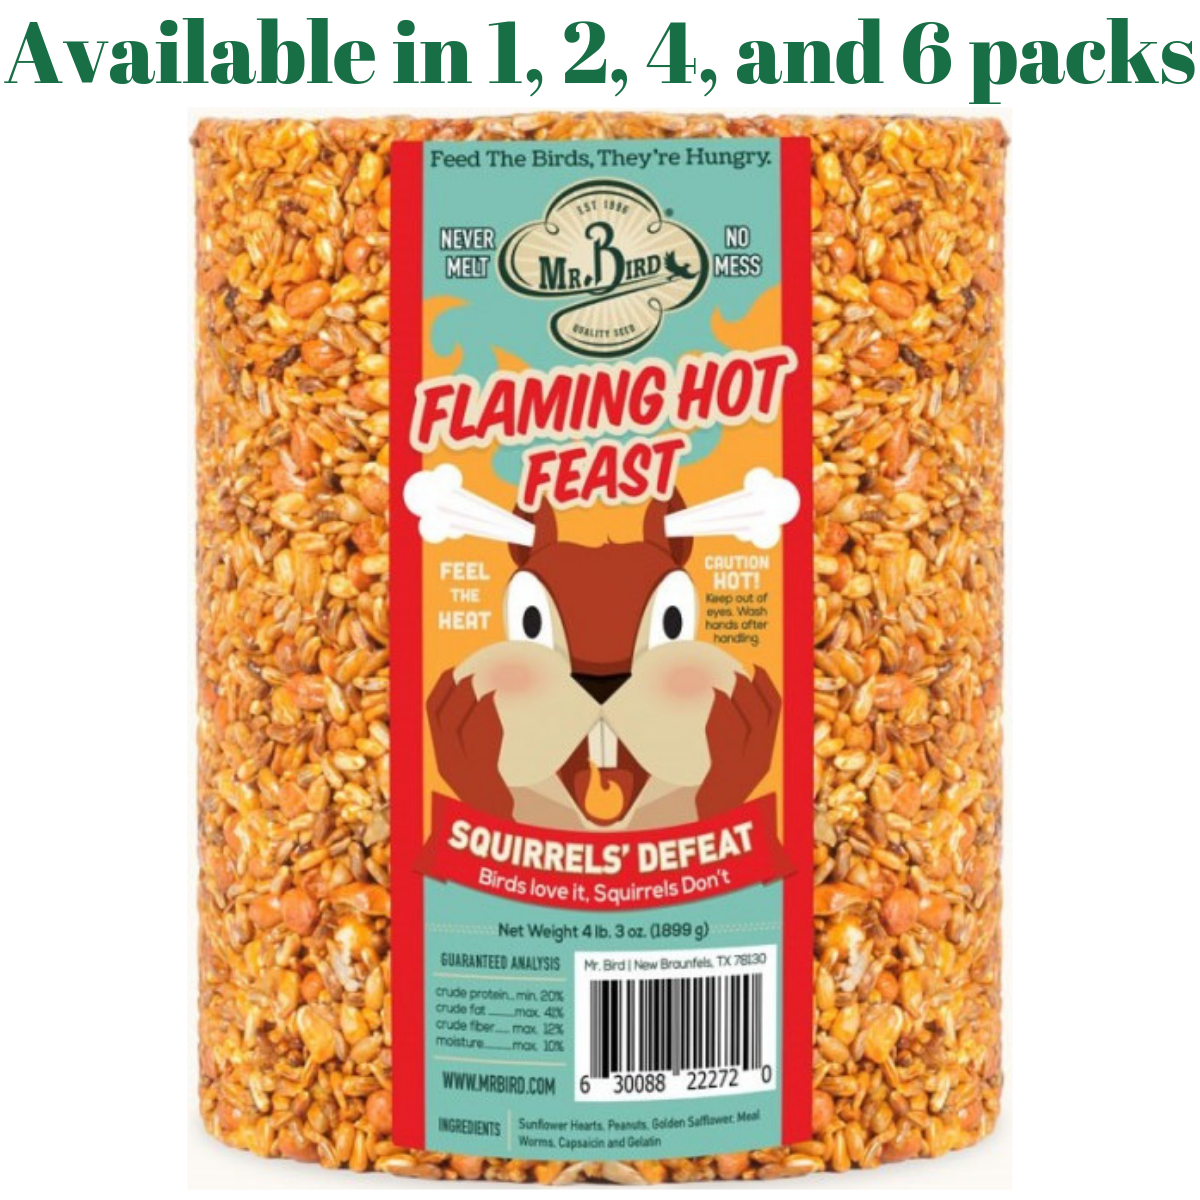 Mr. Bird Flaming Hot Feast Large Wild Bird Seed Cylinder 4 lb. 3 oz. (1, 2, 4, or 6 Packs)